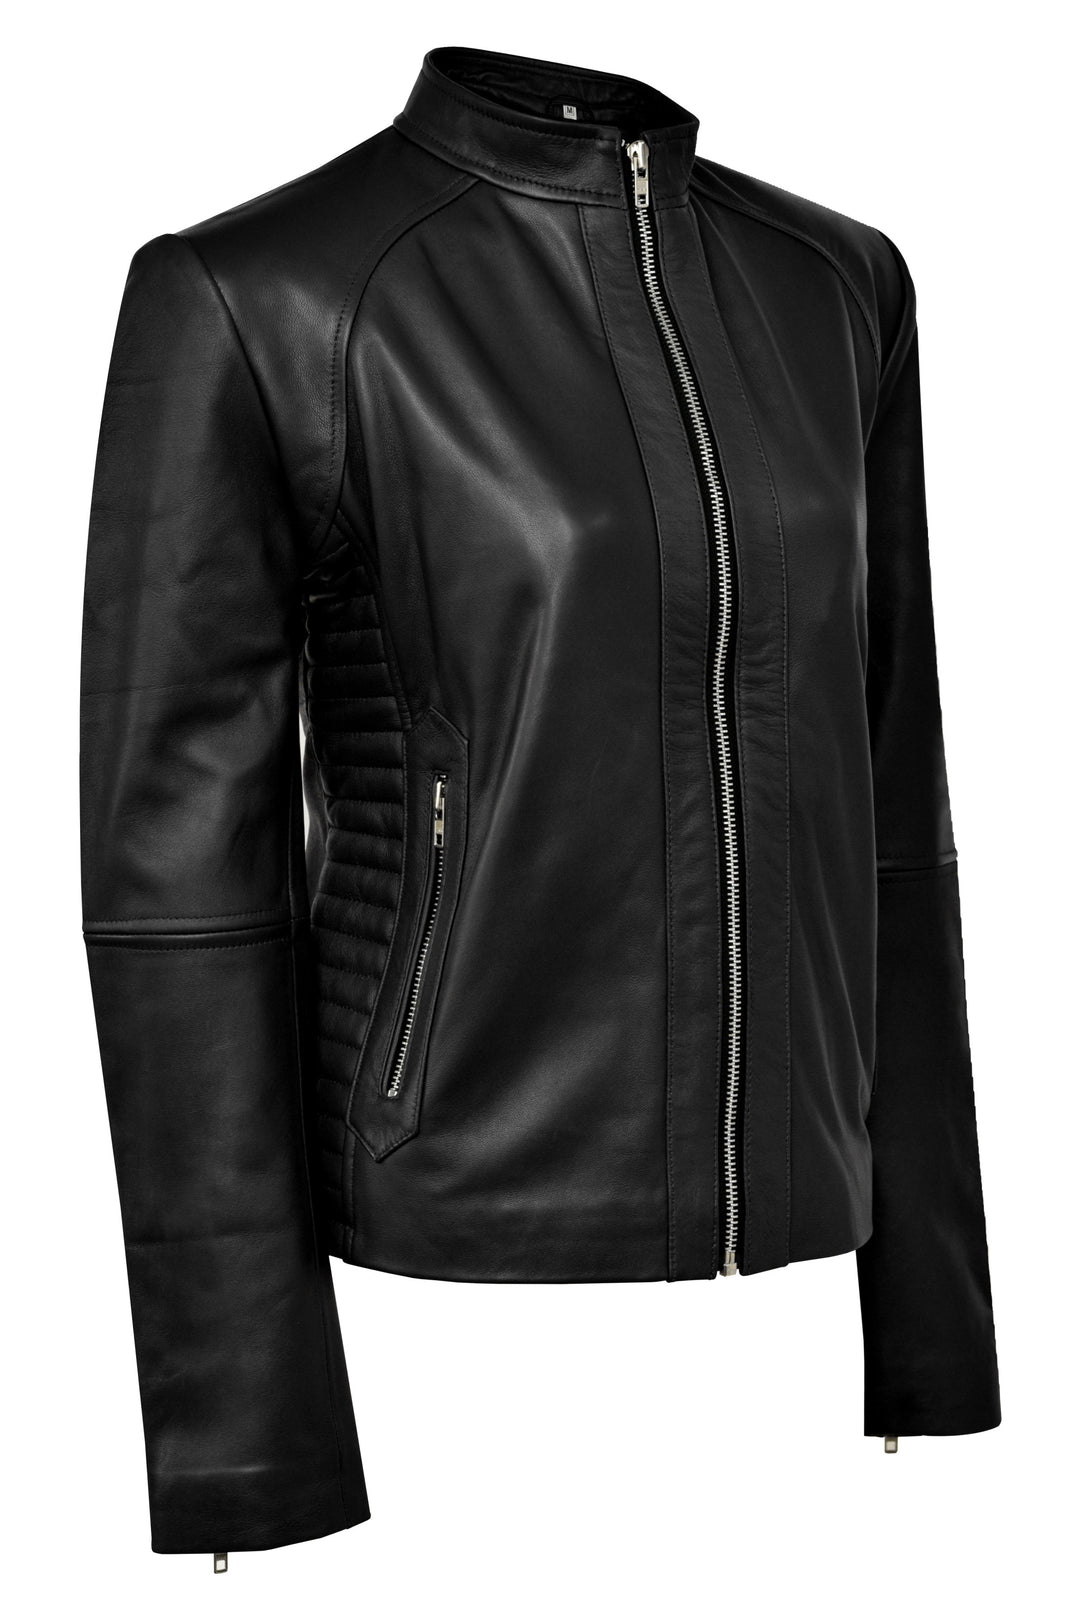 Jessica Gomes Brown Leather Jacket | Women | Sheepskin | Leatherwear ...